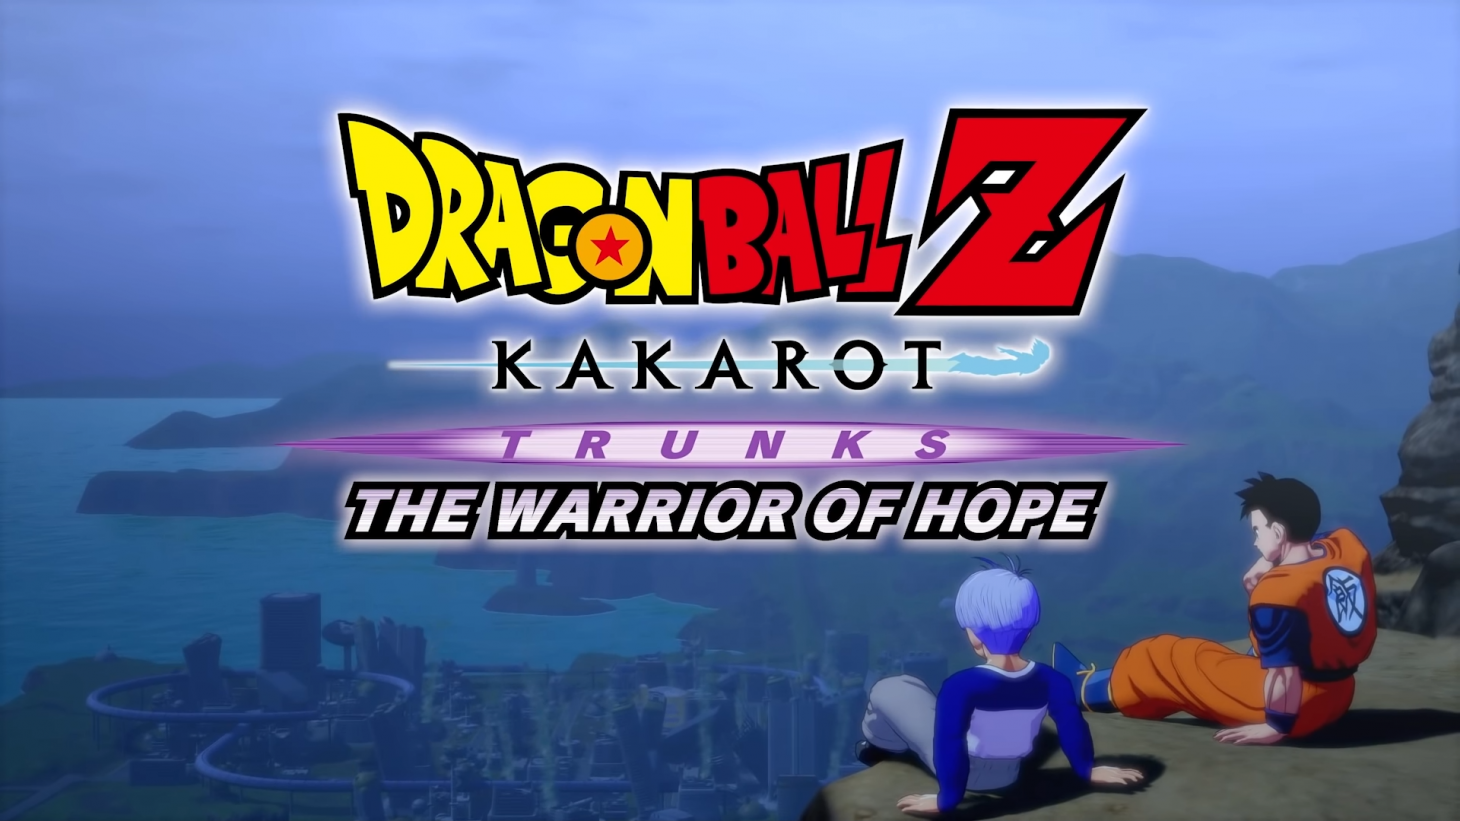 Dragon Ball Z: Kakarot Super Saiyan God DLC launches today